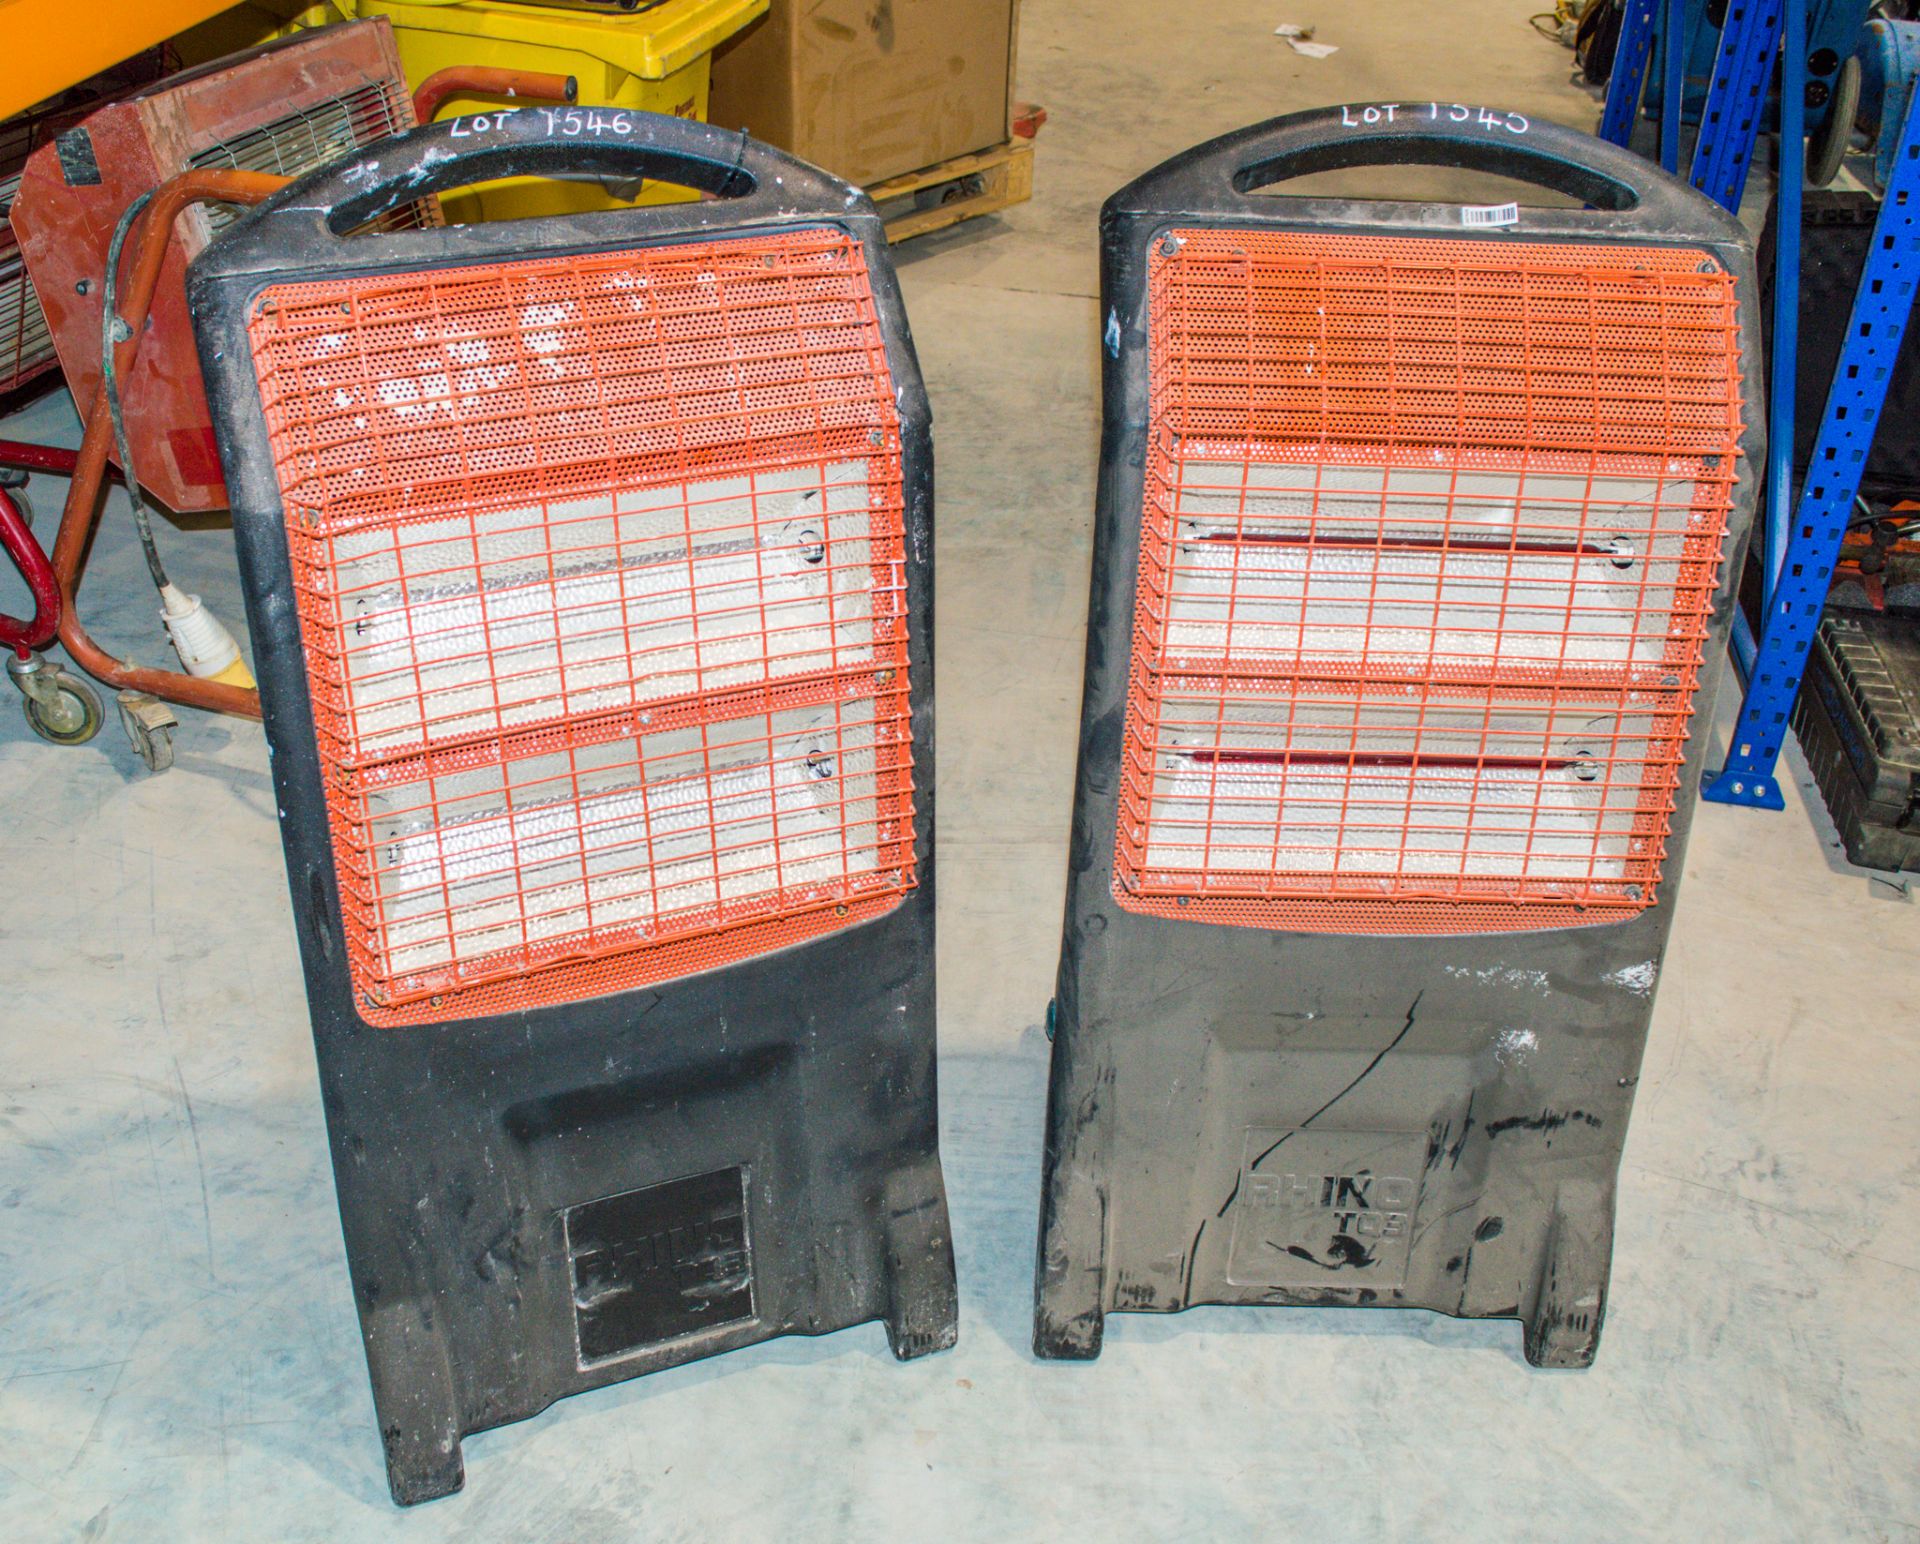 2 - Rhino 110v infrared heaters CO